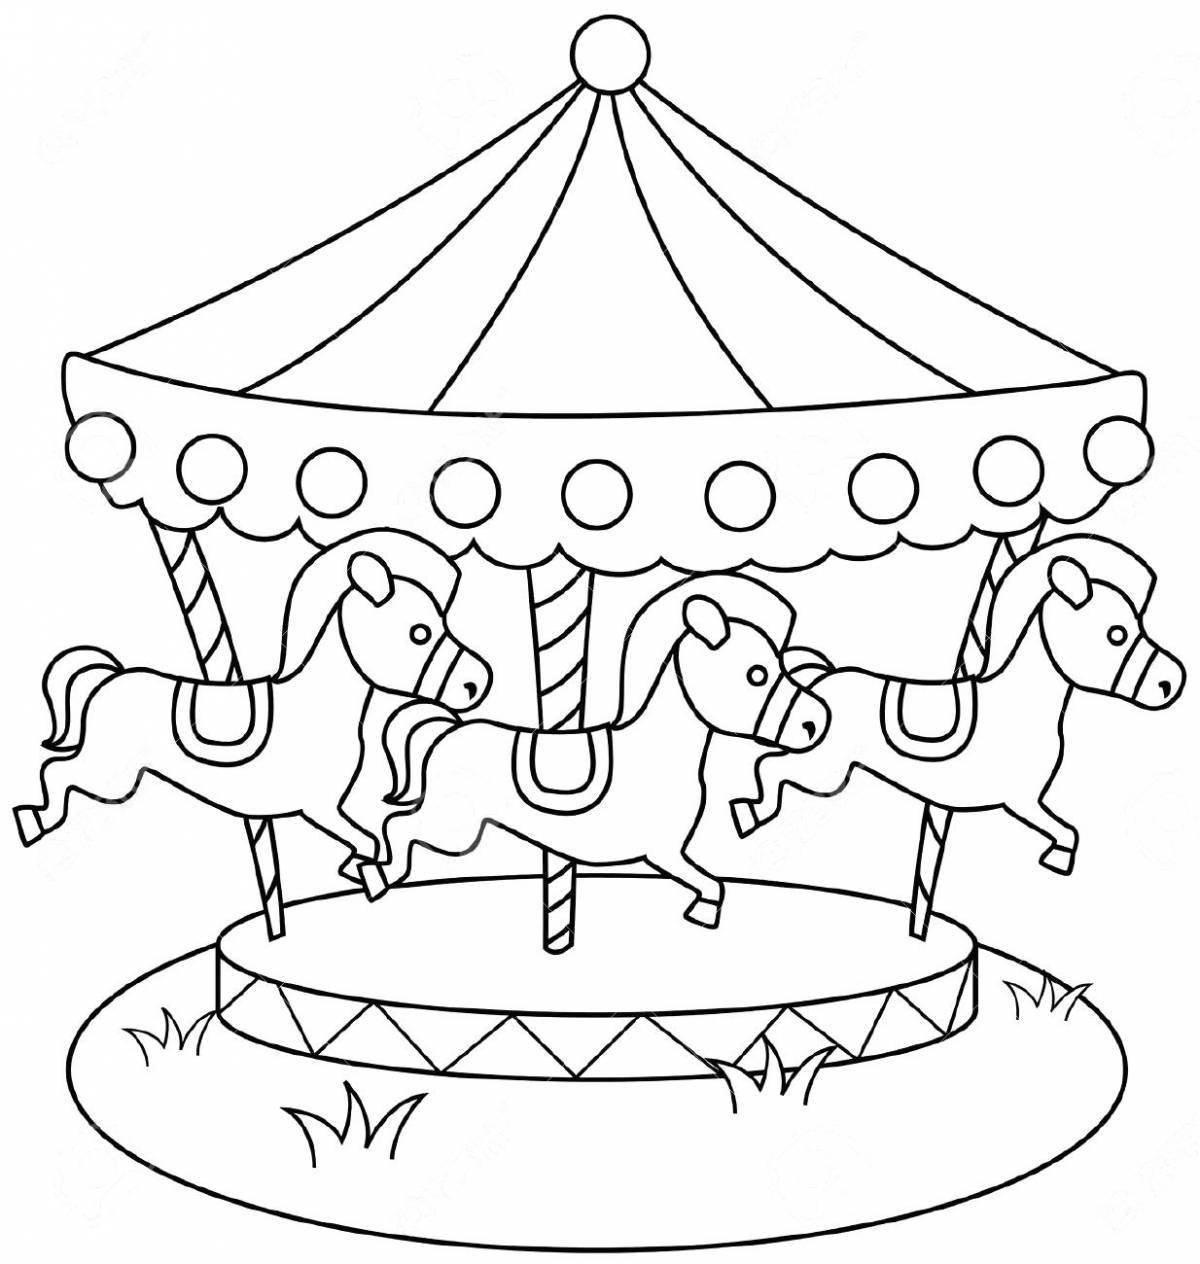 Inspirational circus coloring book for kids